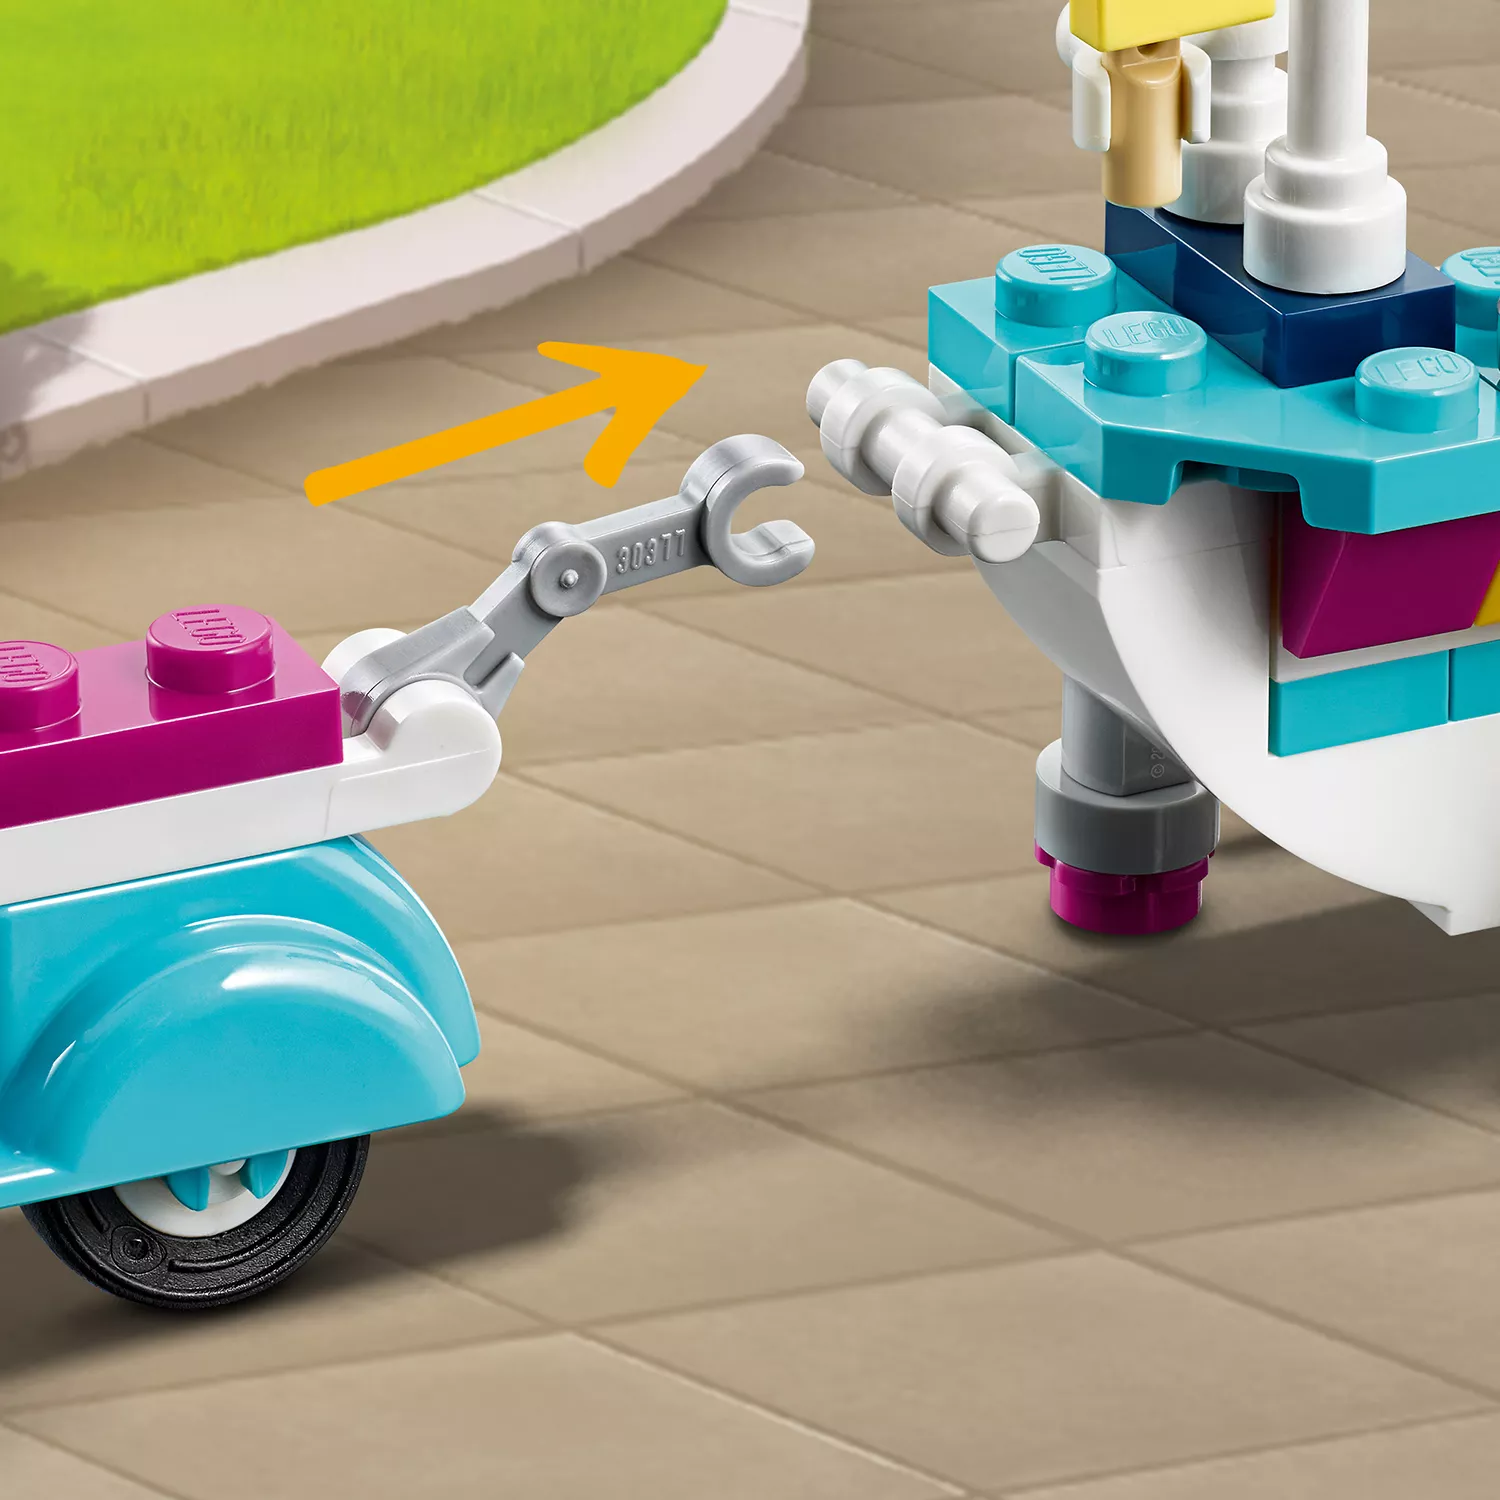 LEGO Friends Stephanies mobiler Eiswagen - 41389